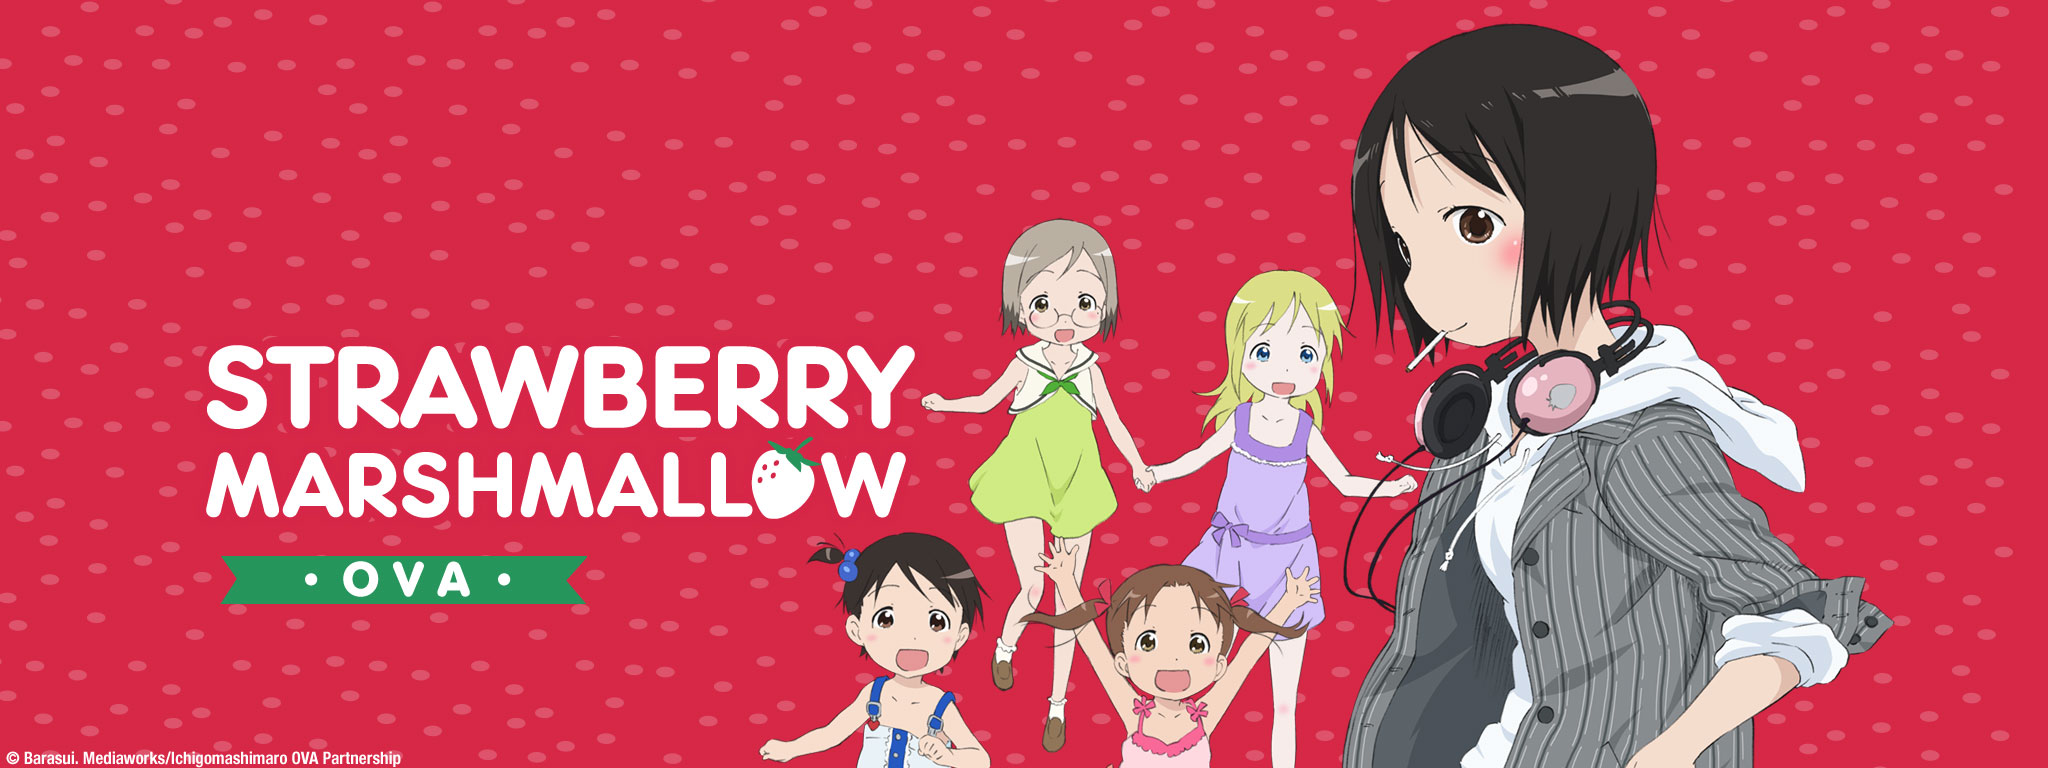 Title Art for Strawberry Marshmallow OVA